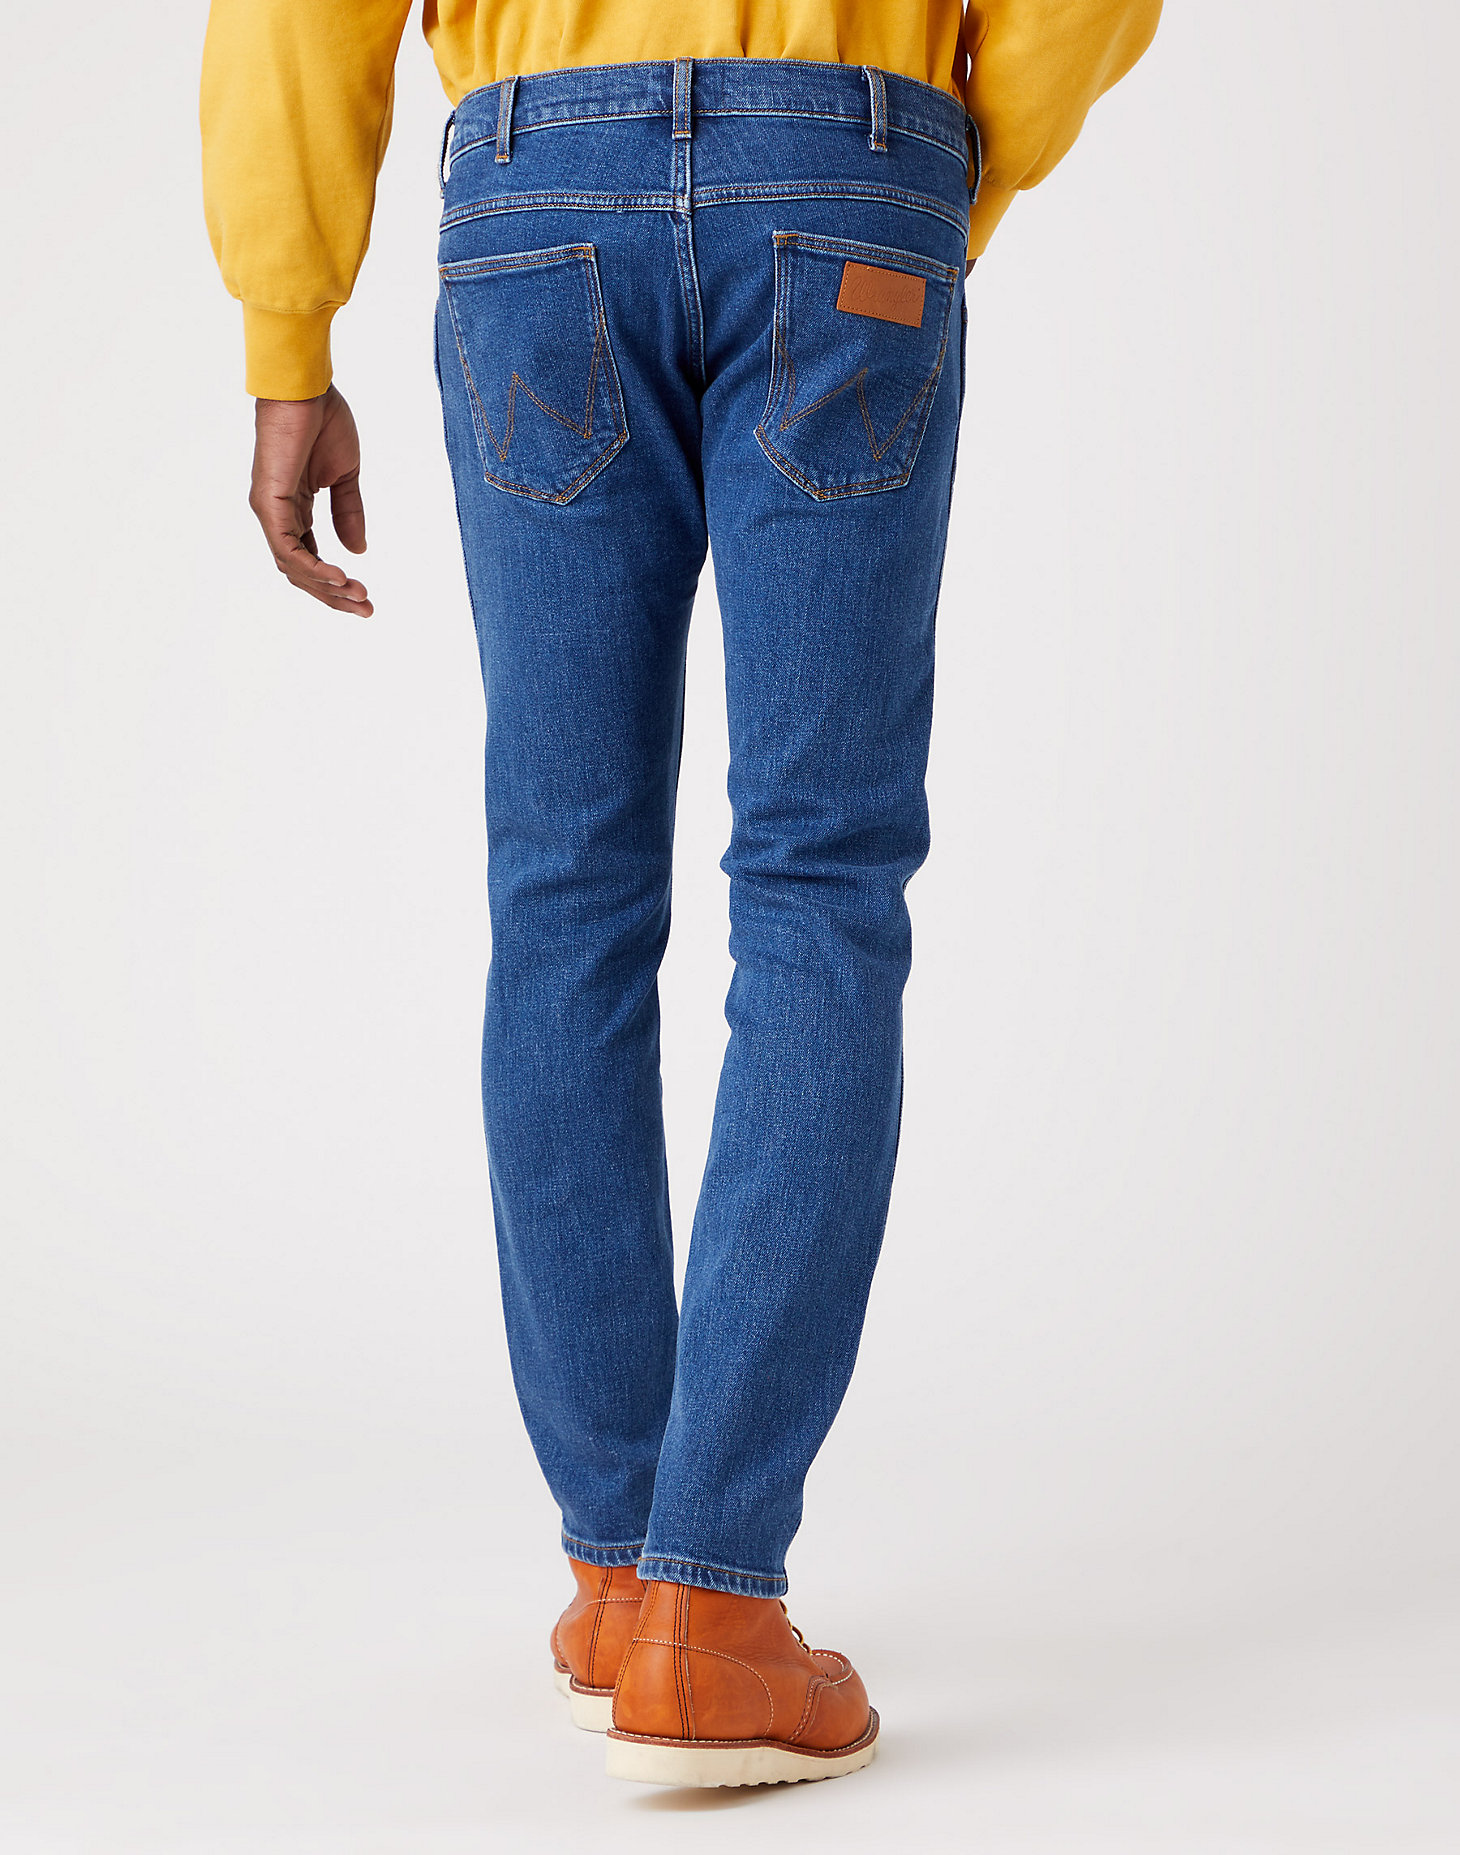 Bryson Jeans in Revival alternative view 2